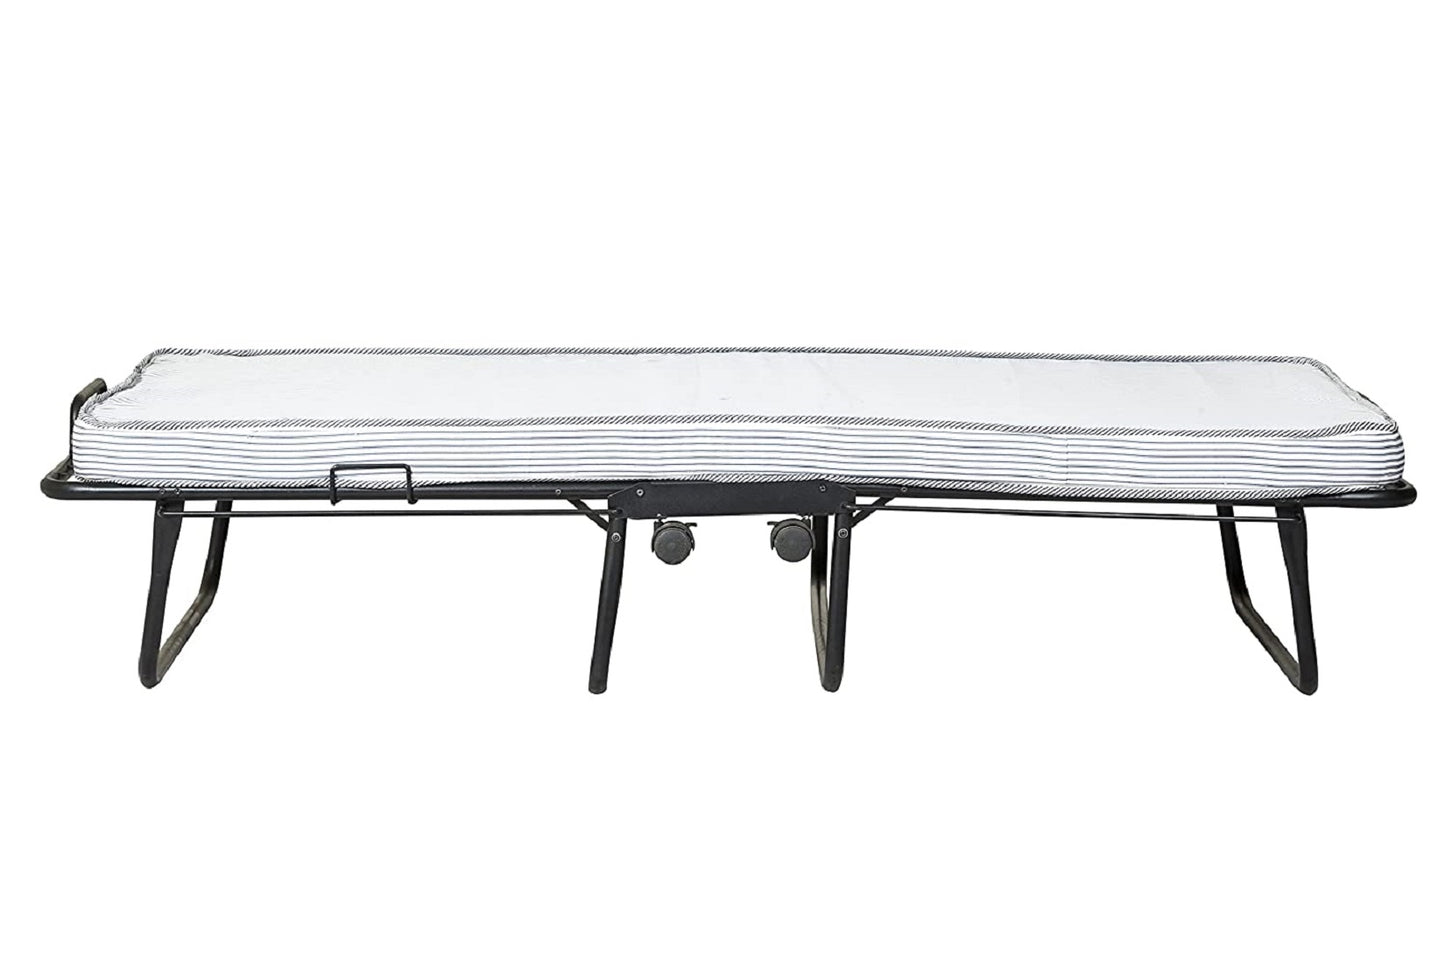 Truckle Single Folding Bed - metallikafurniture.com